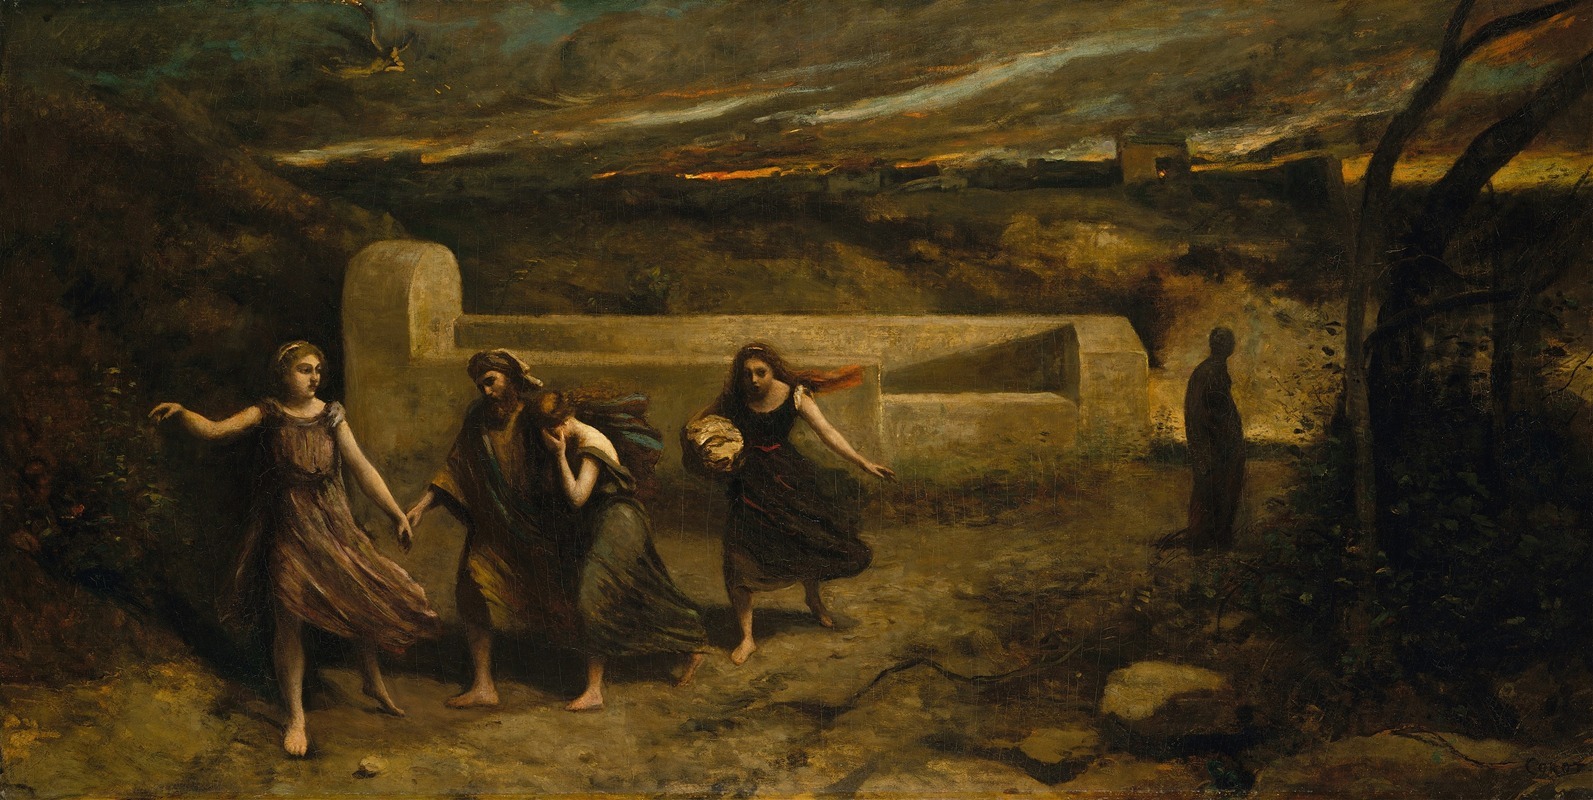 Jean-Baptiste-Camille Corot - The Burning of Sodom